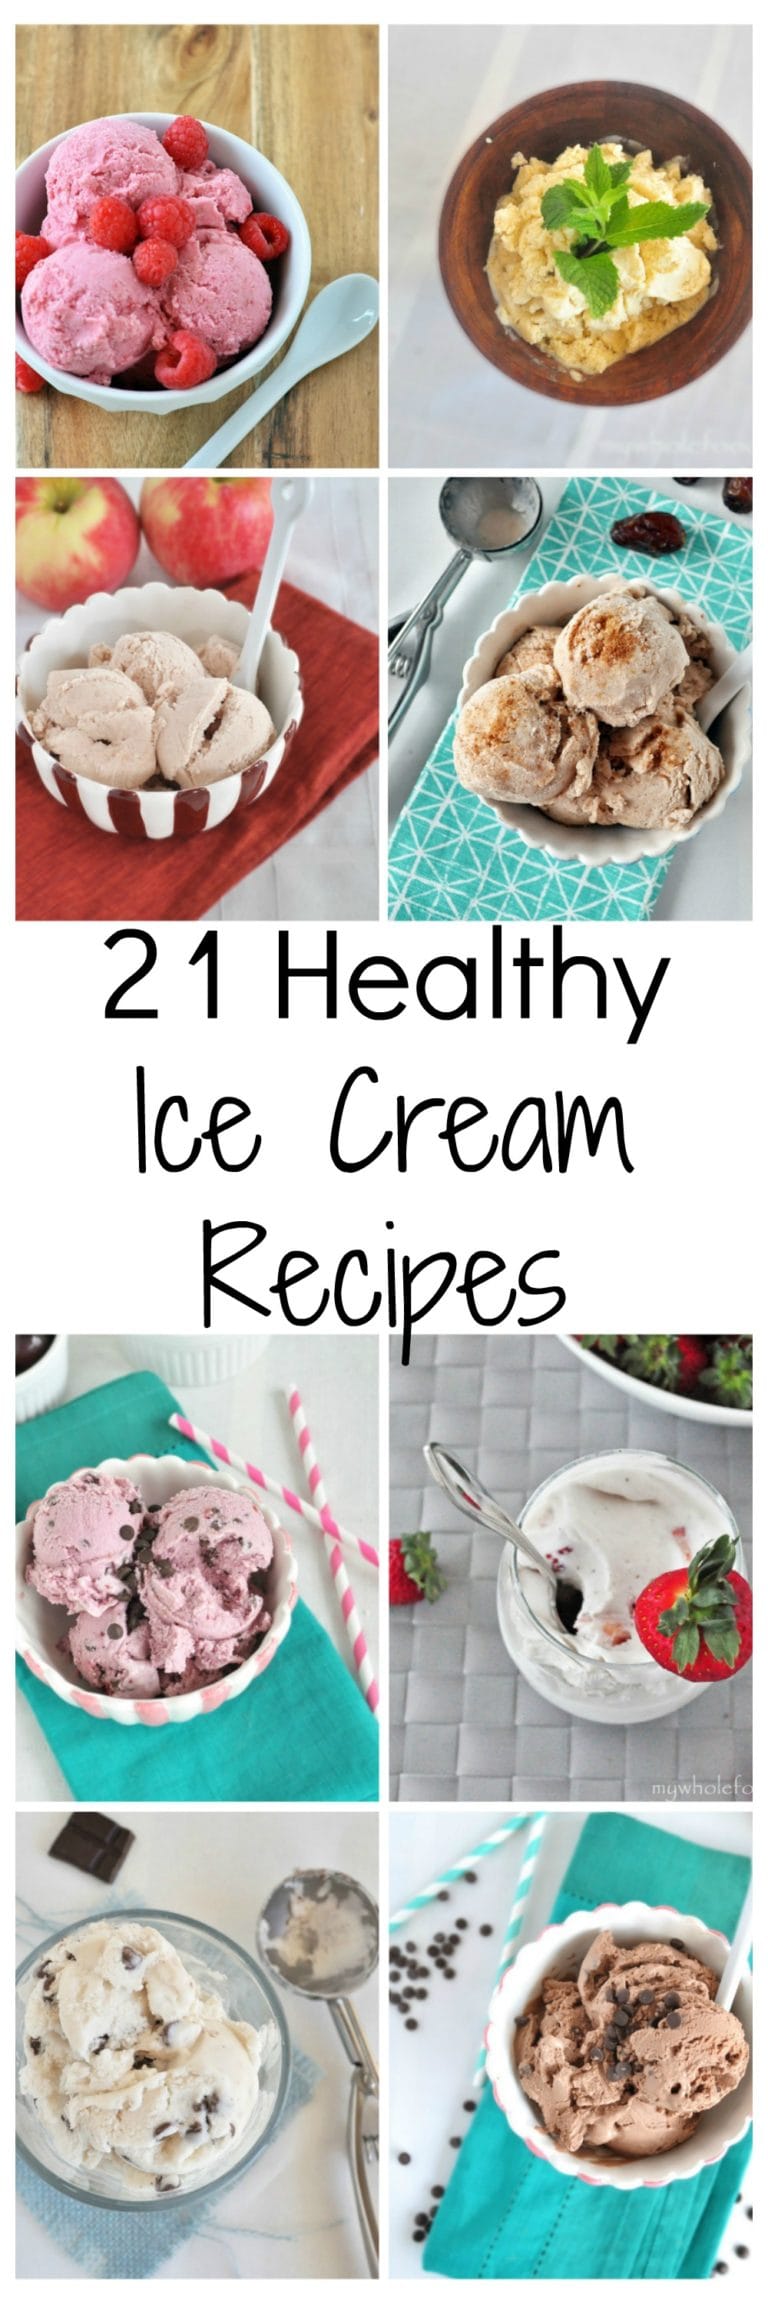 21 Healthy Ice Cream Recipes - My Whole Food Life